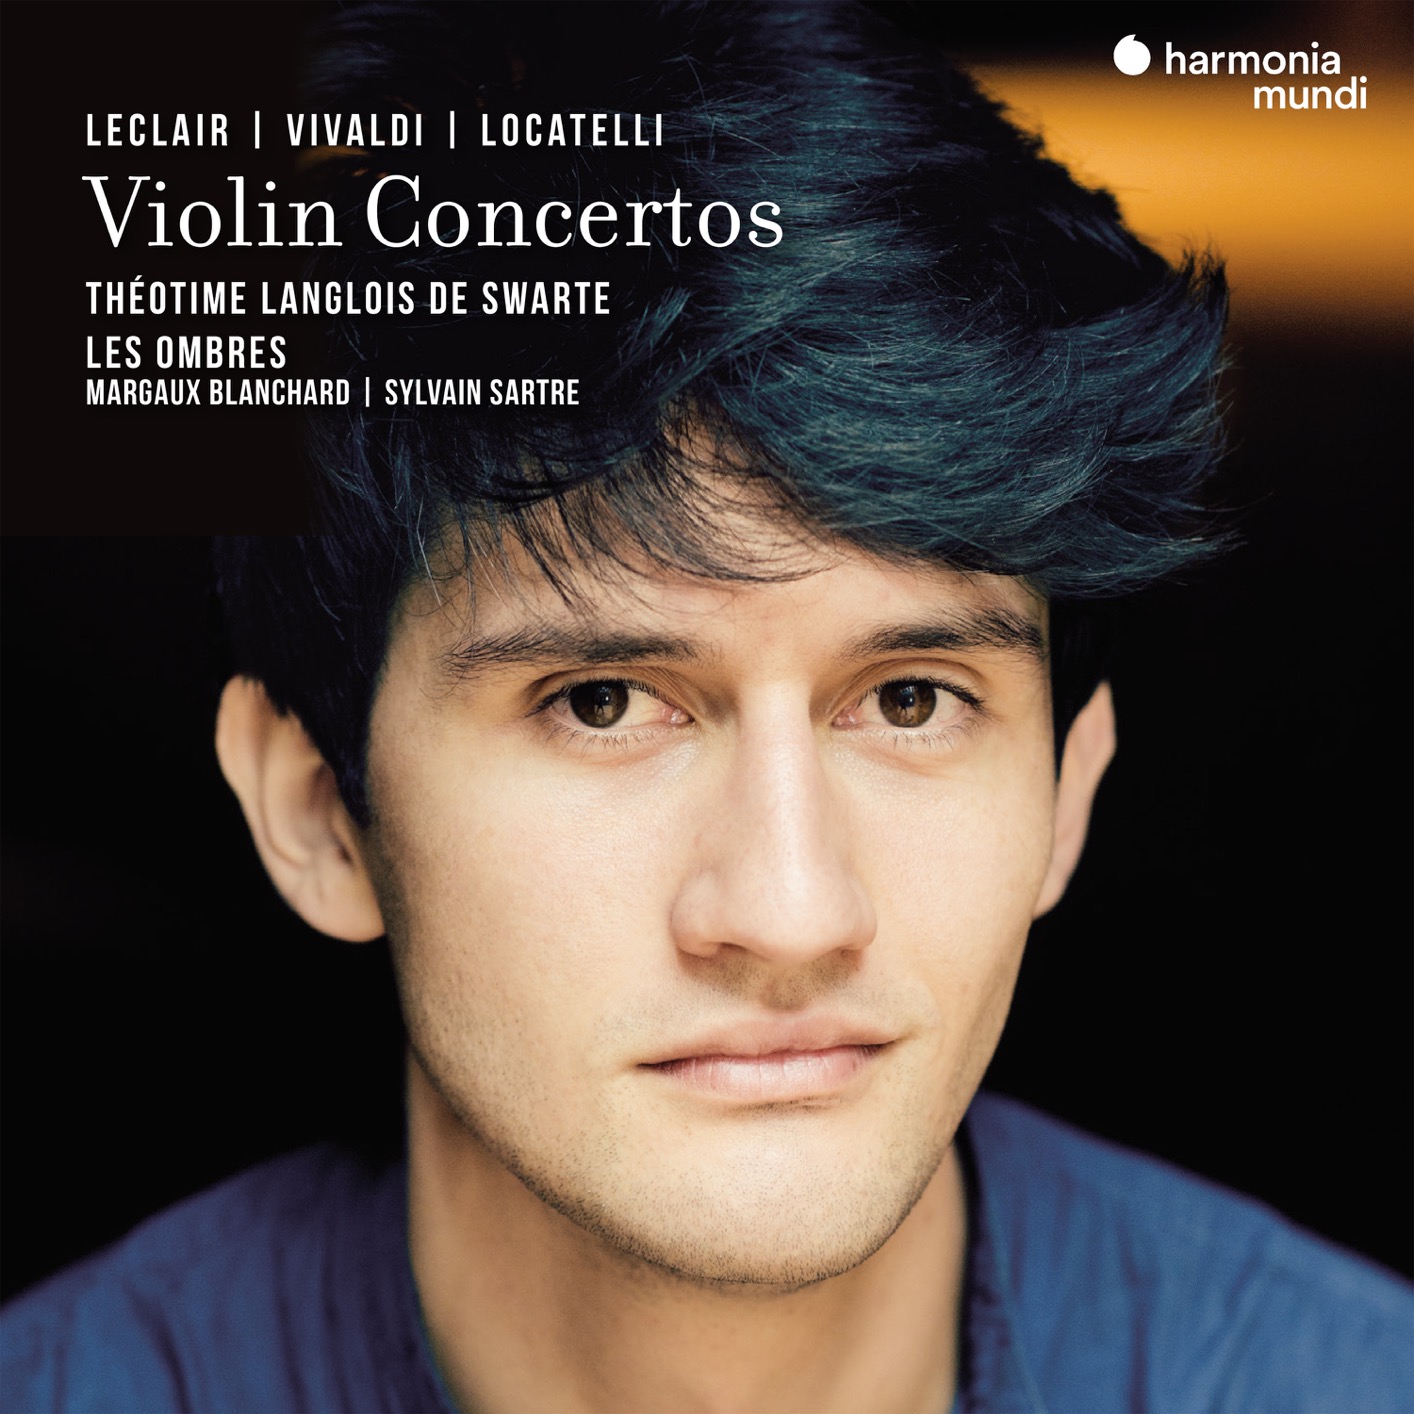 Theotime Langlois de Swarte - Vivaldi, Leclair, Locatelli Violin Concertos 24-96